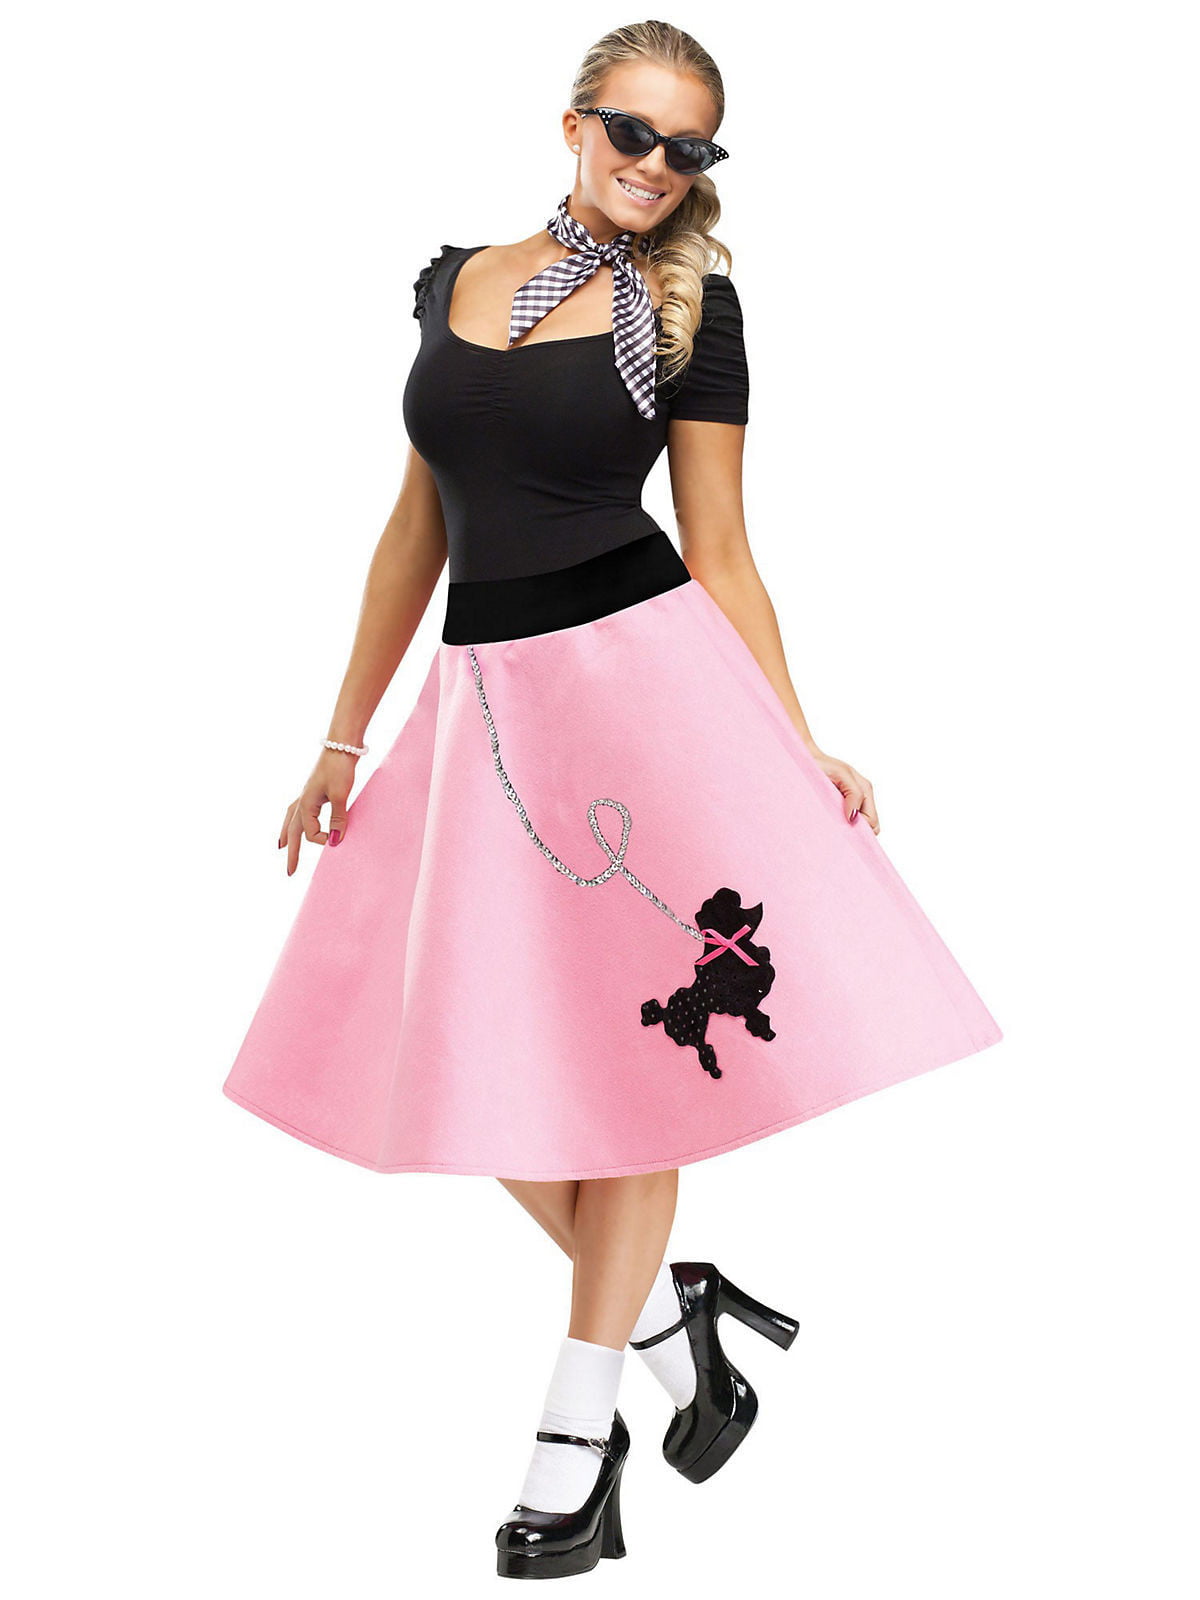 McCalls 2252 A  Fashion Poodle skirt Skirt pattern